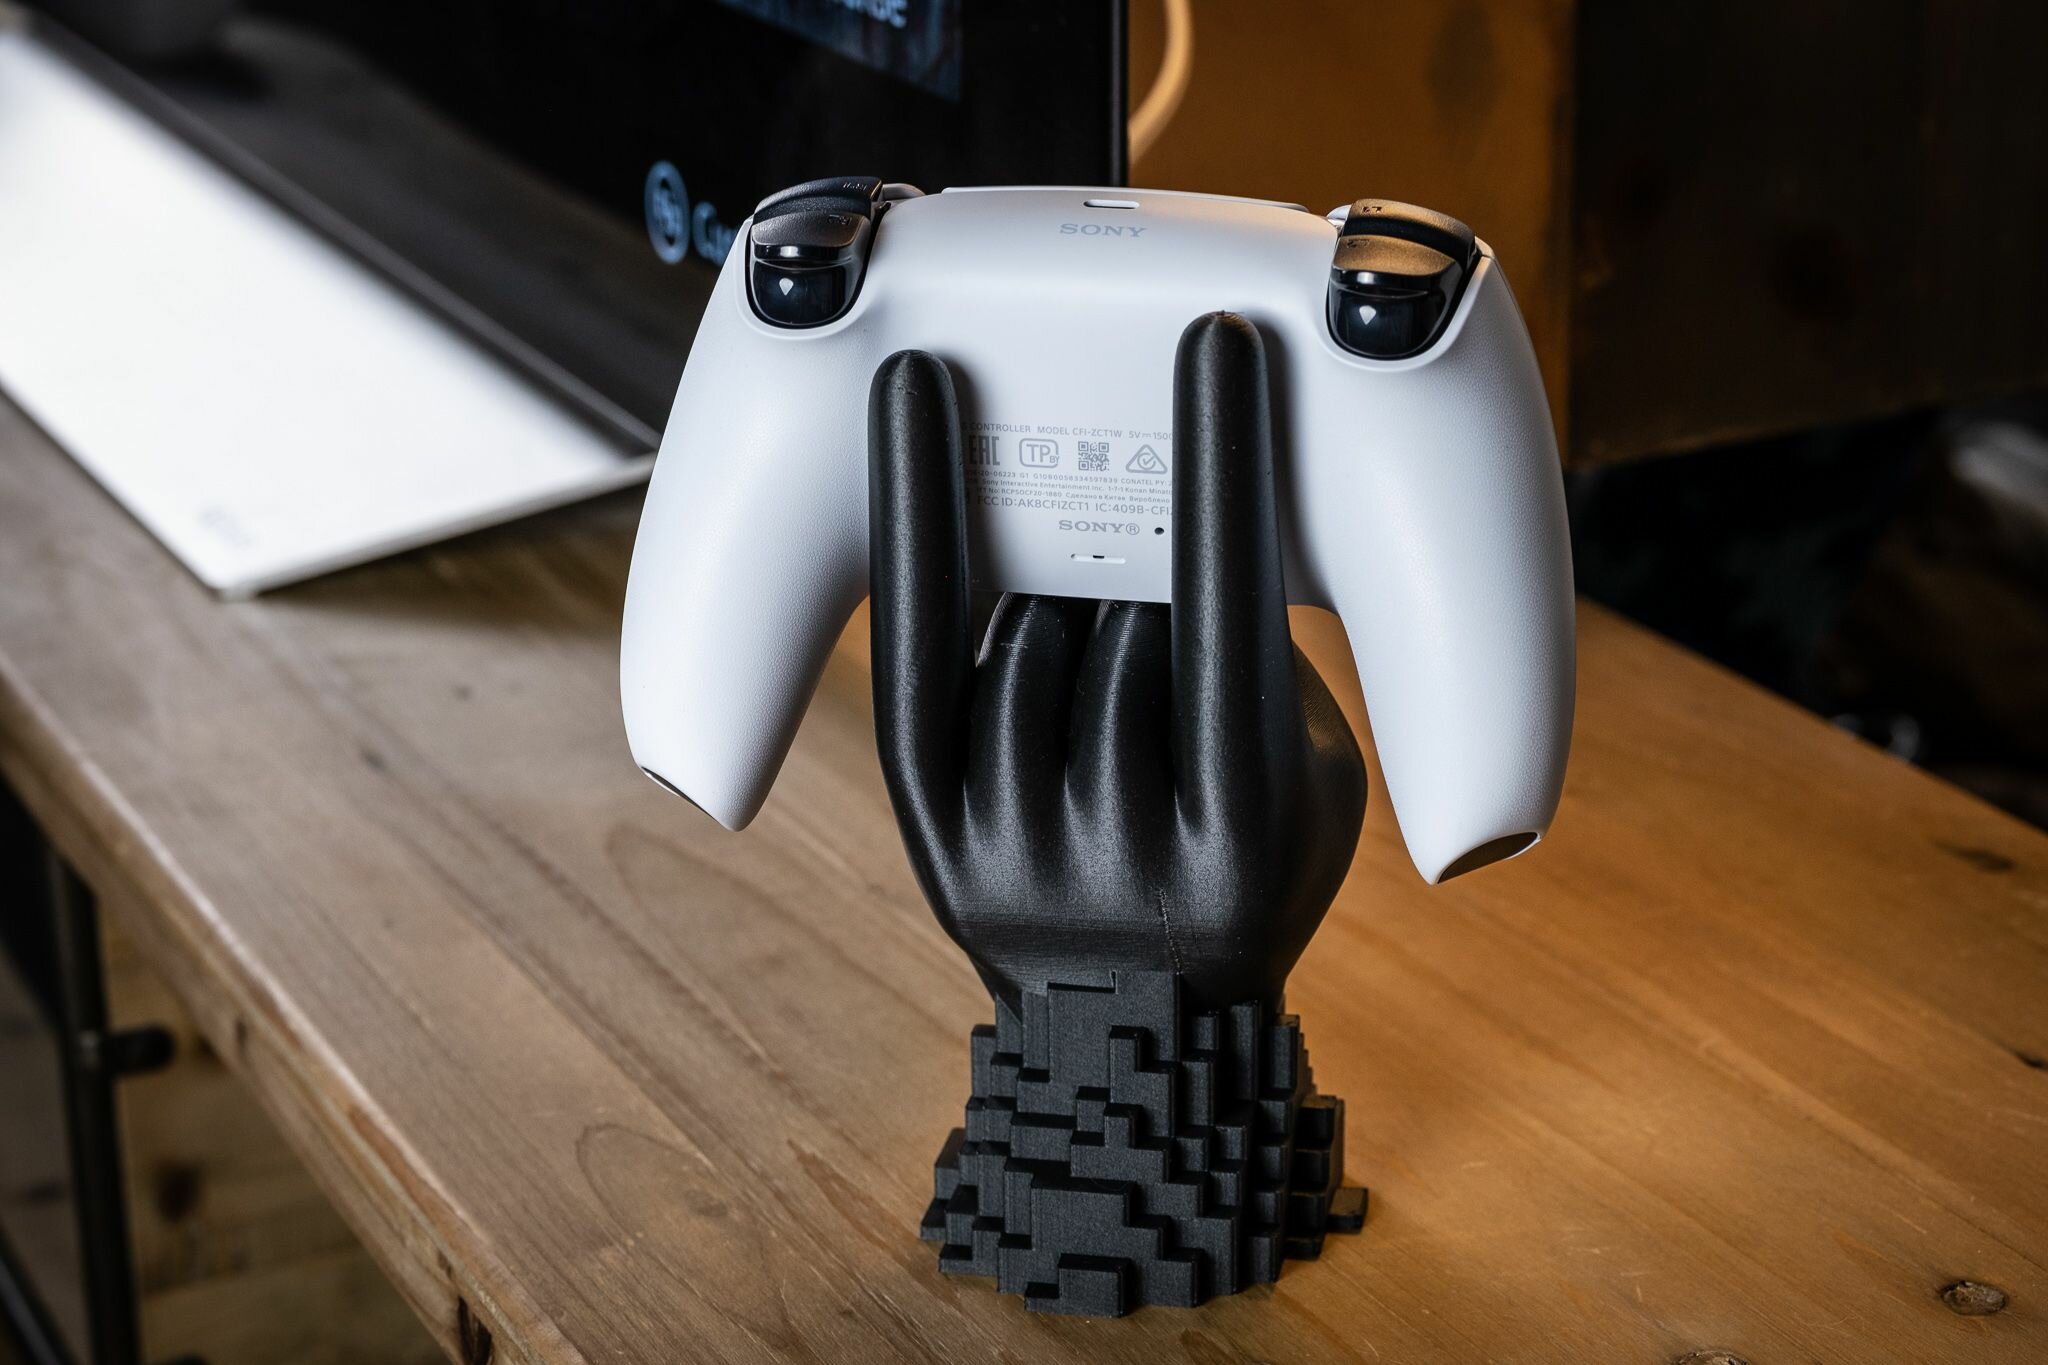 Держатель для джойстиков PS5, Xbox One, Xbox Series X/S рука